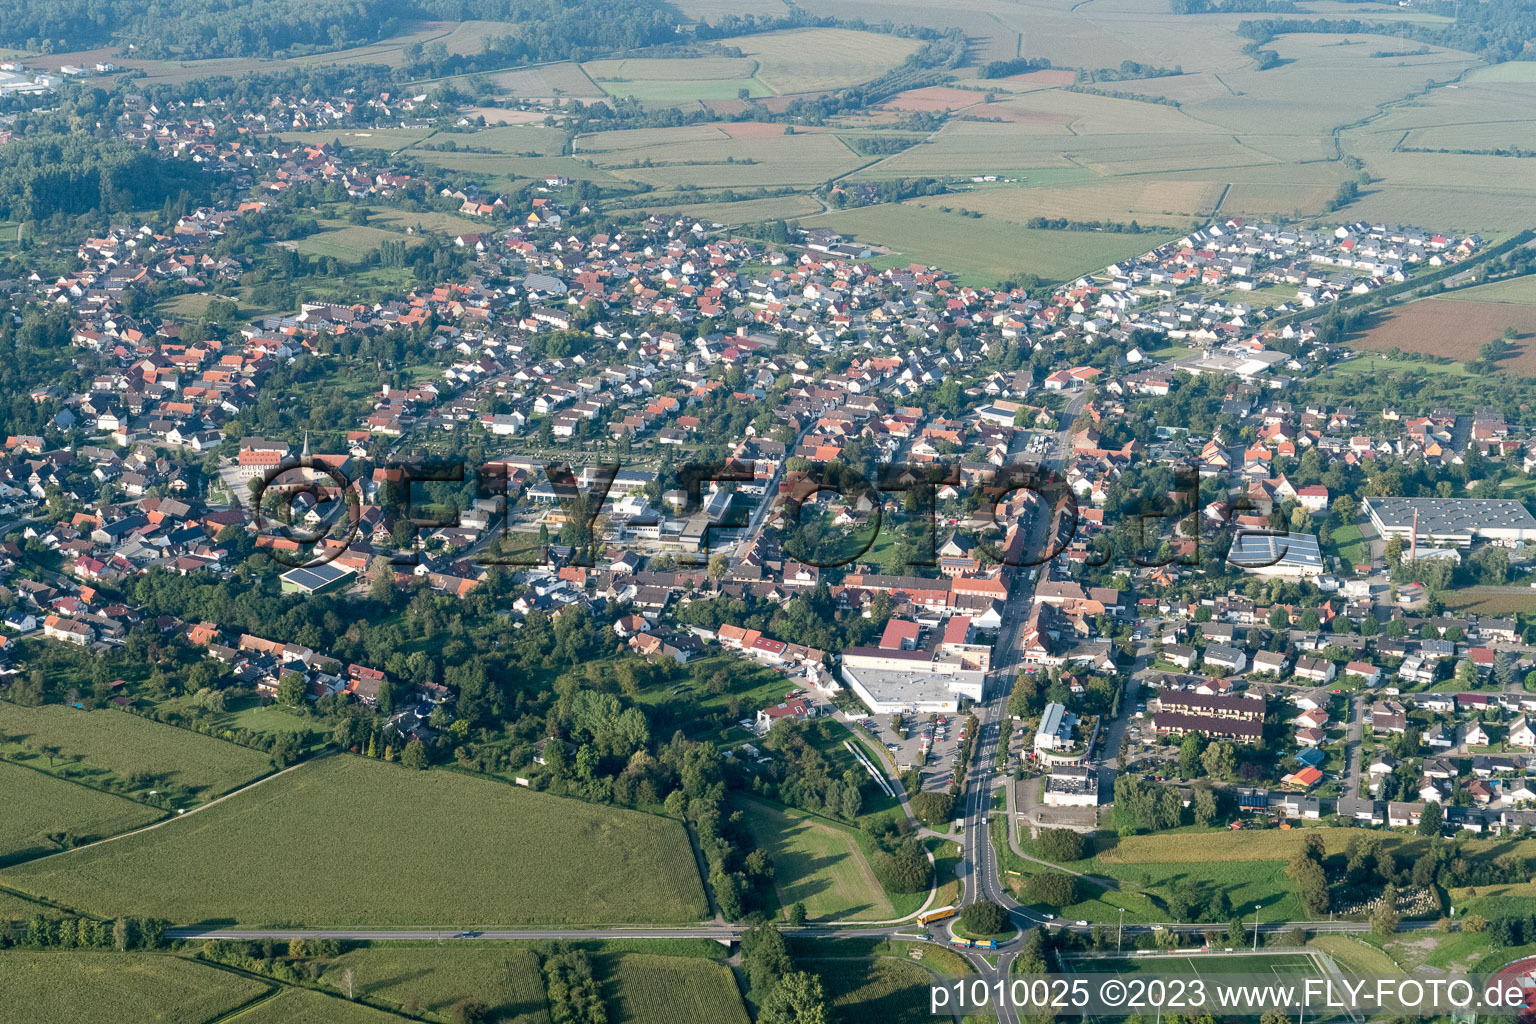 District Freistett in Rheinau in the state Baden-Wuerttemberg, Germany from a drone